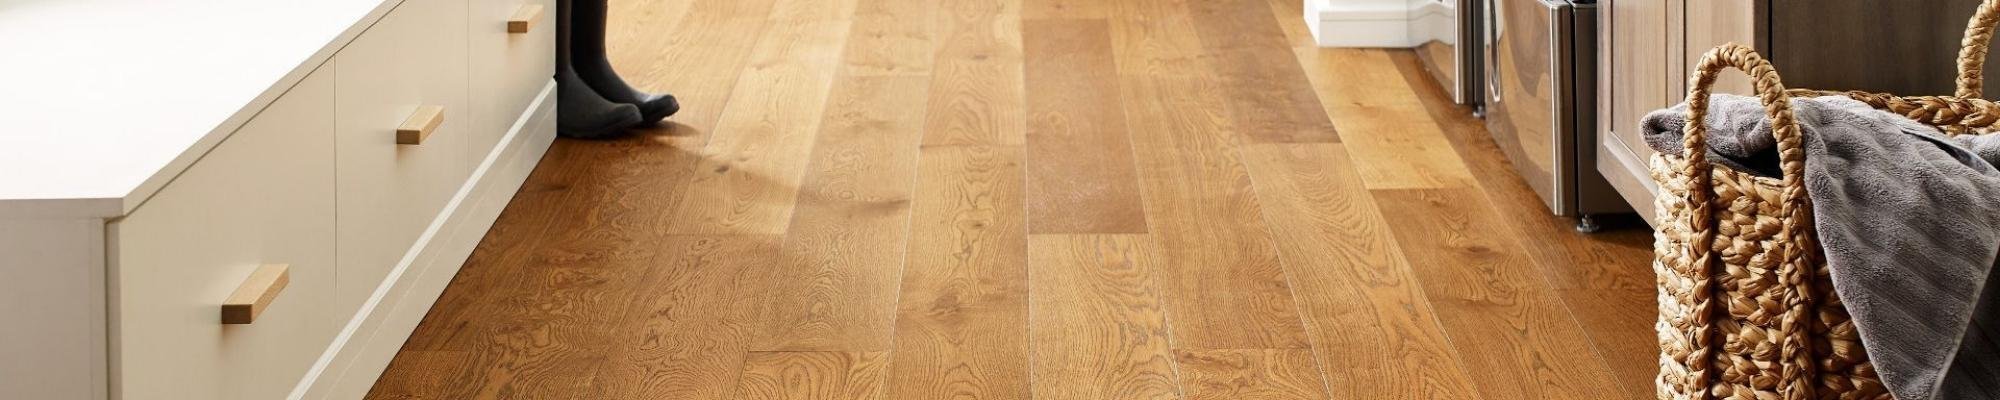 Hardwood Flooring from Green Carpet Co. - The Flooring Connection in San Antonio